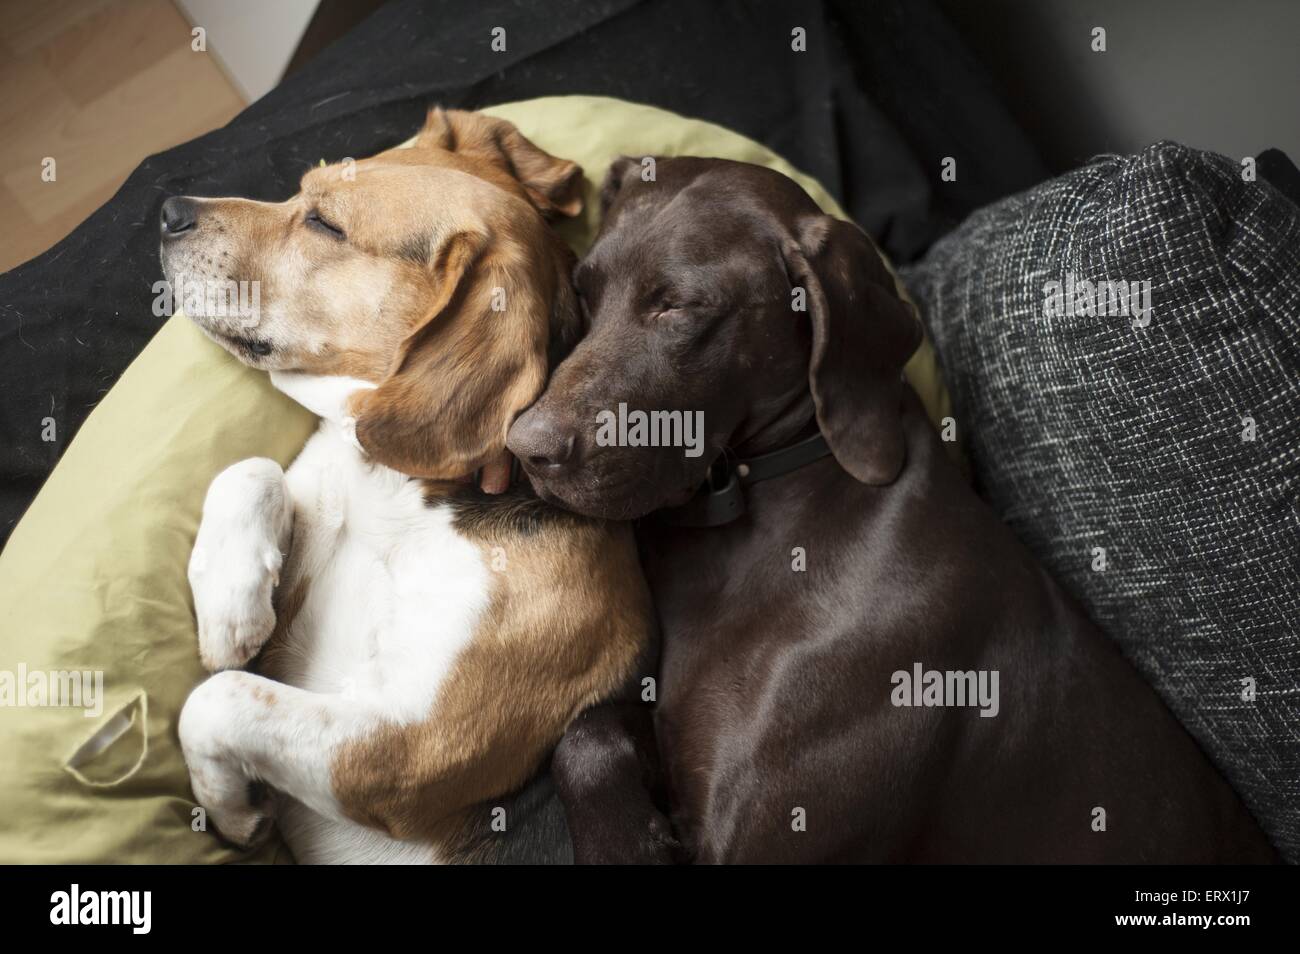 2 sleeping dogs Stock Photo